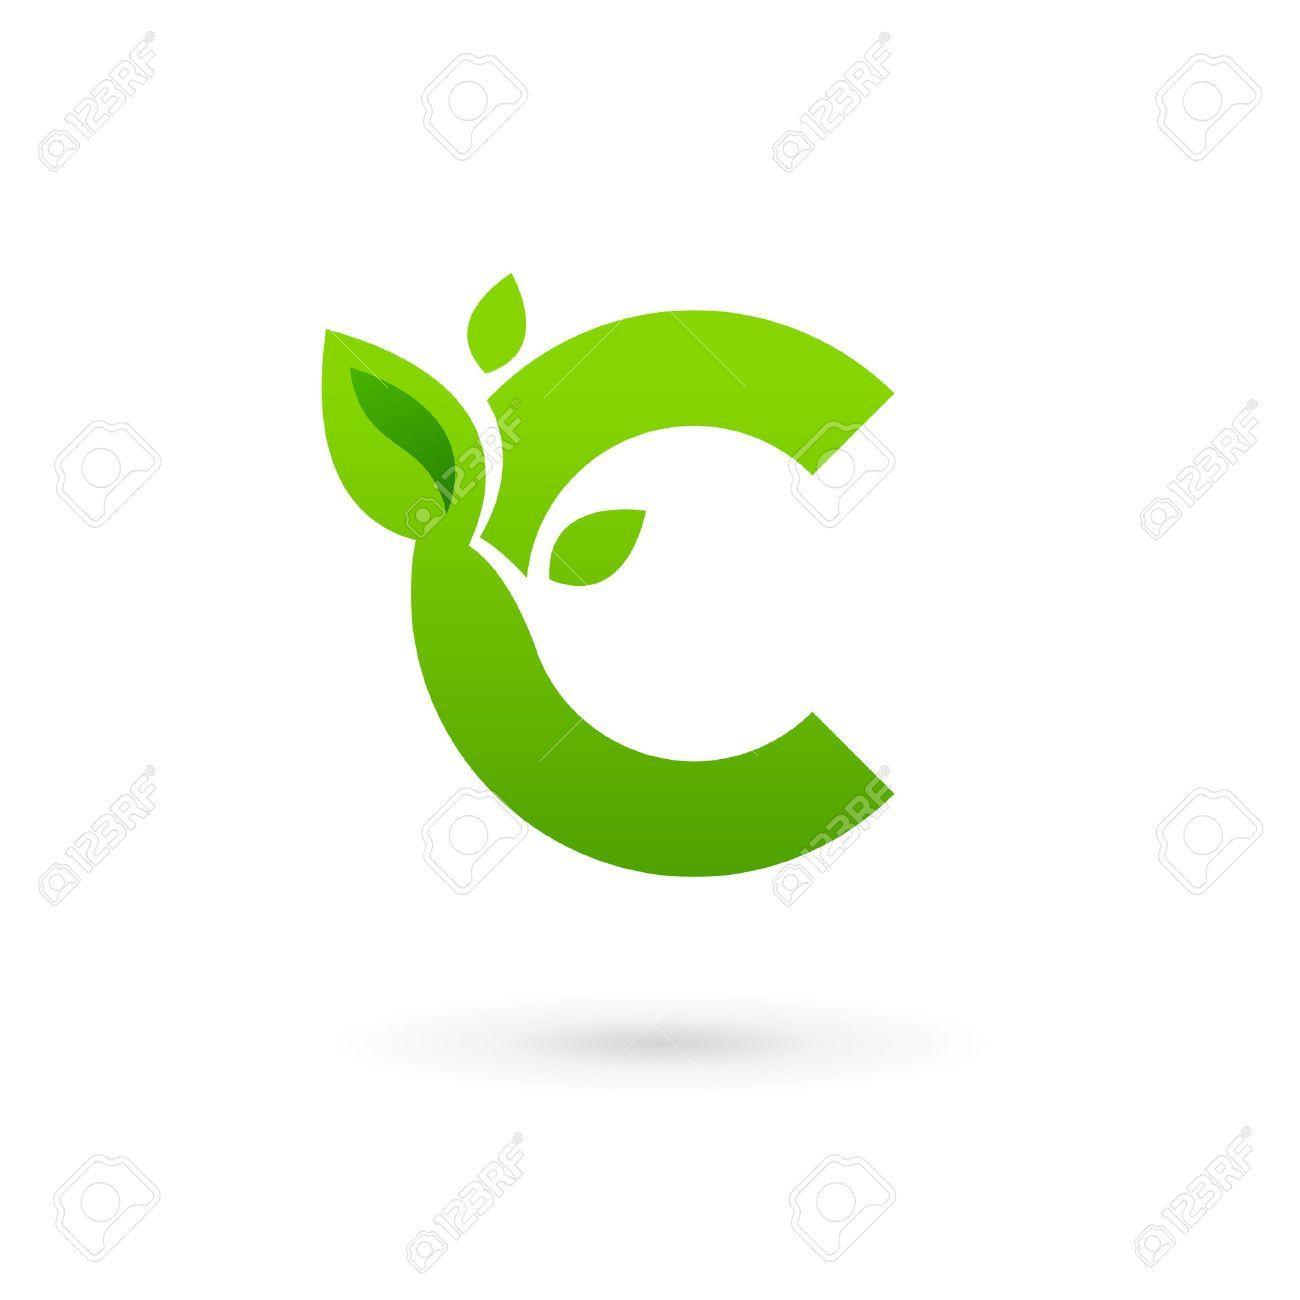 3 Leaf Logo - Letter C eco leaves logo icon design template elements. Vector ...